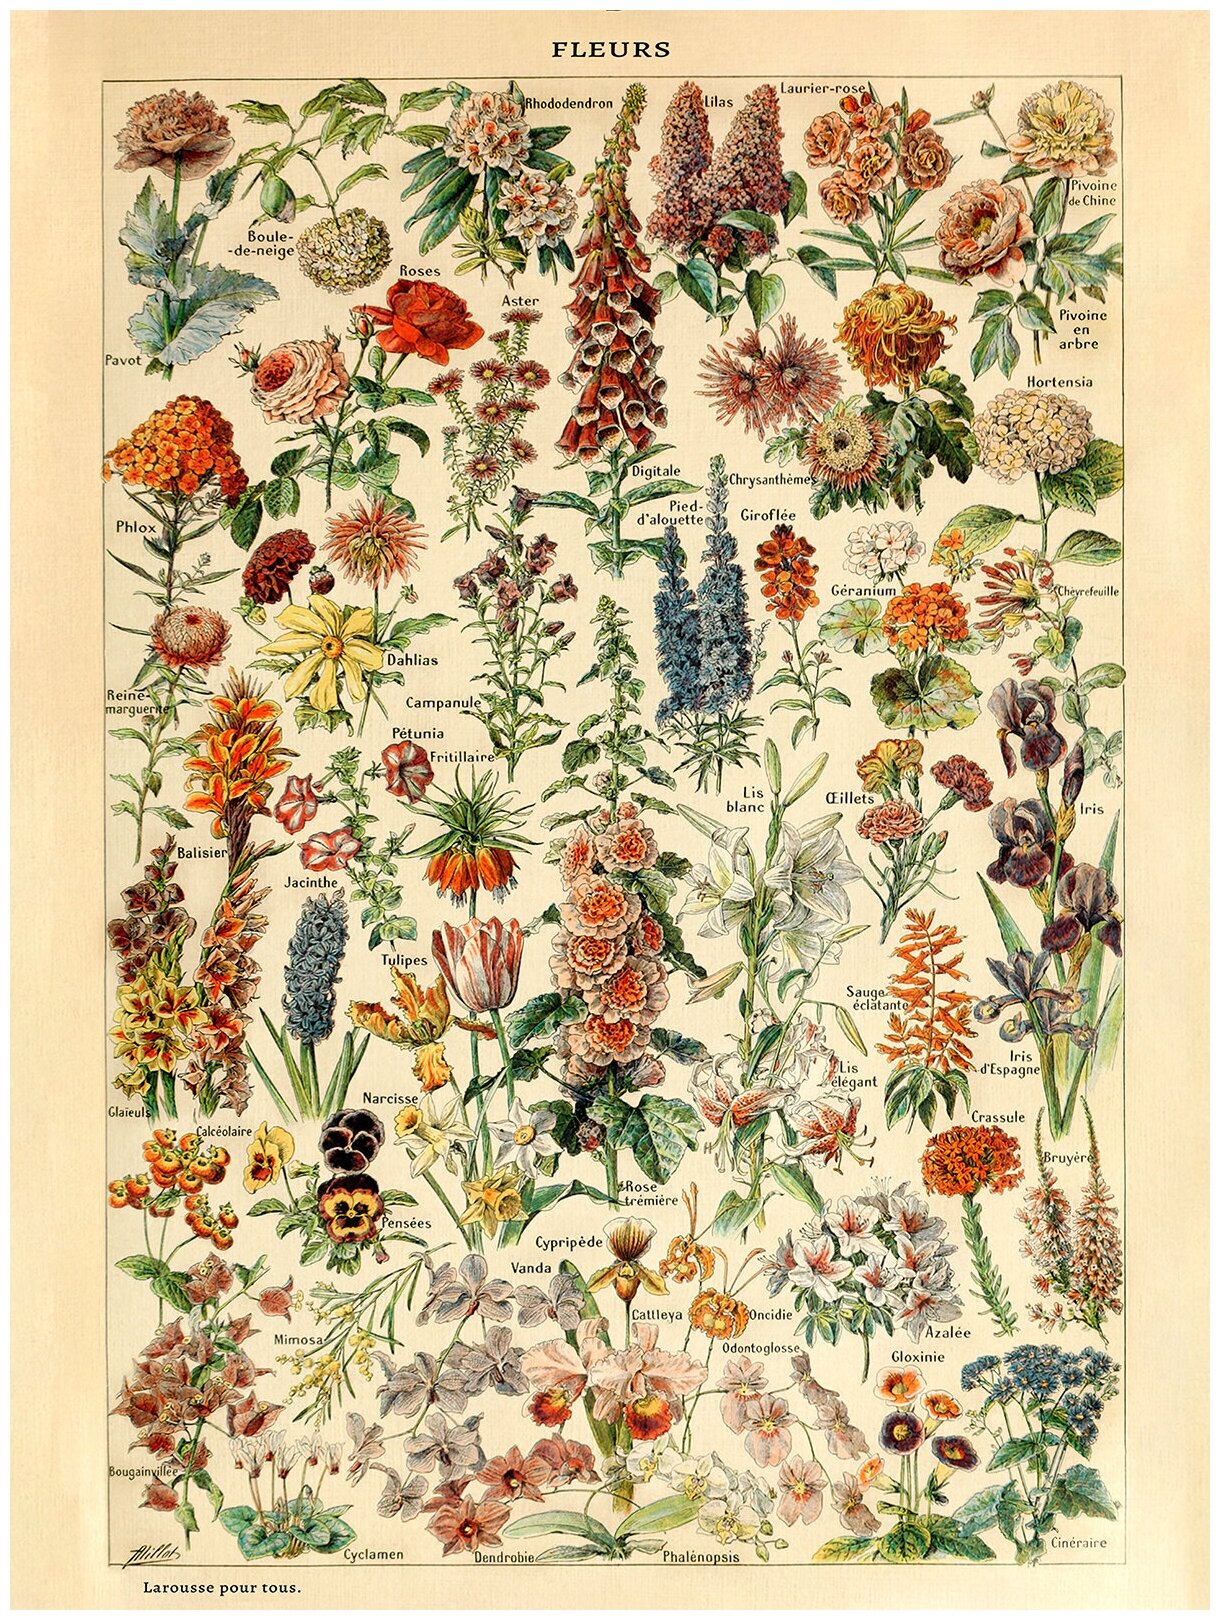 Постер / Плакат / Картина на холсте Виды цветов и растений